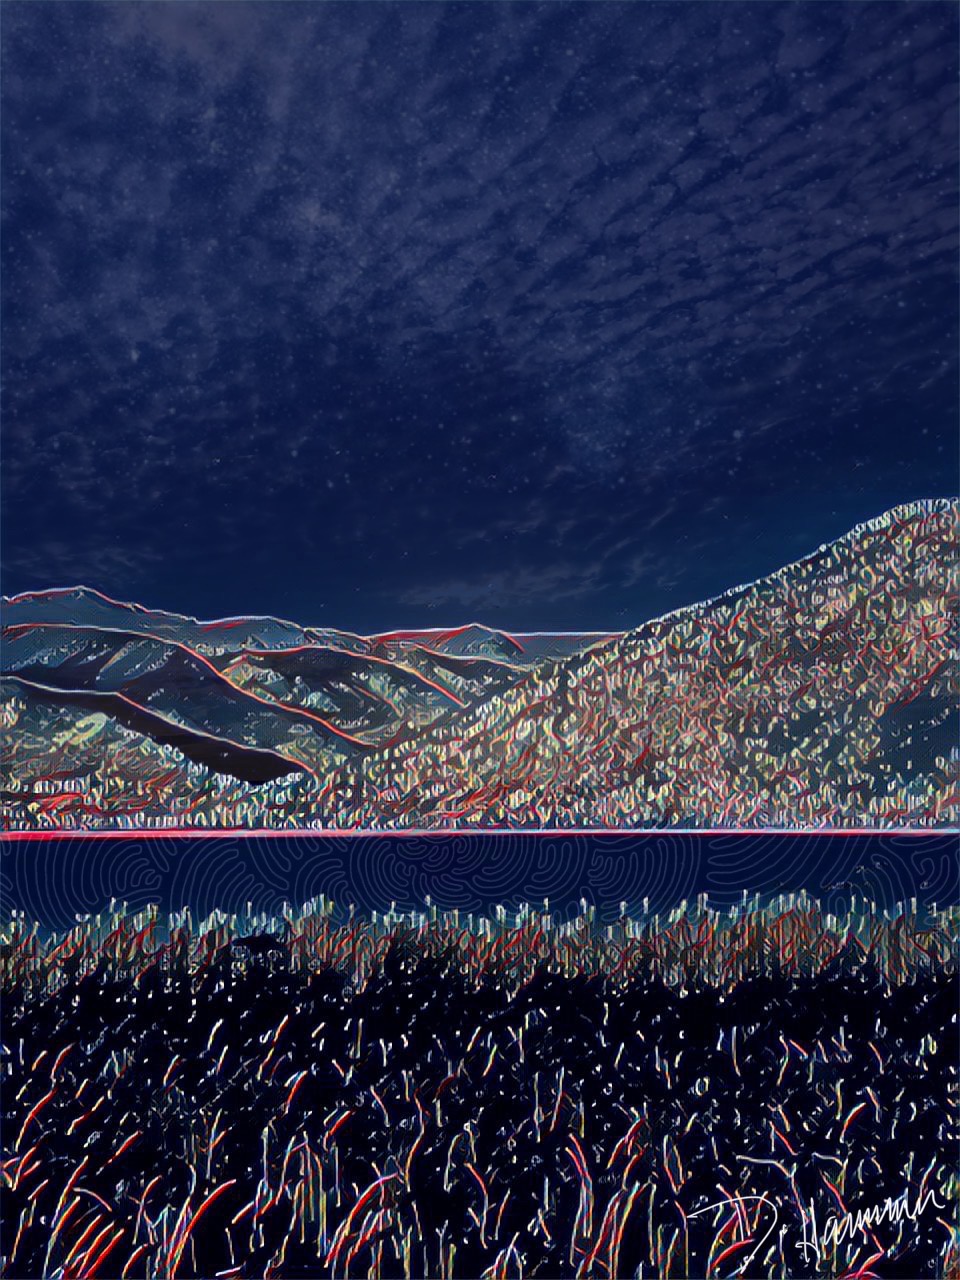 Art photo of mountain and lake scene at night